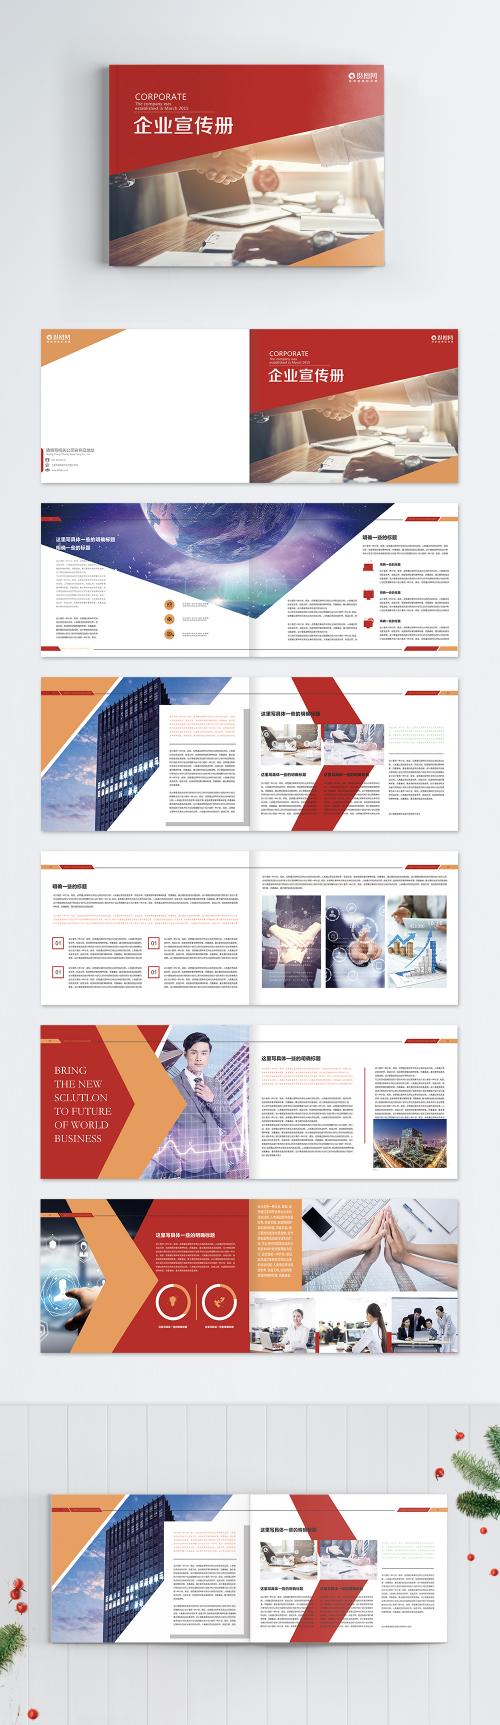 LovePik - business enterprise brochure set - 400337597